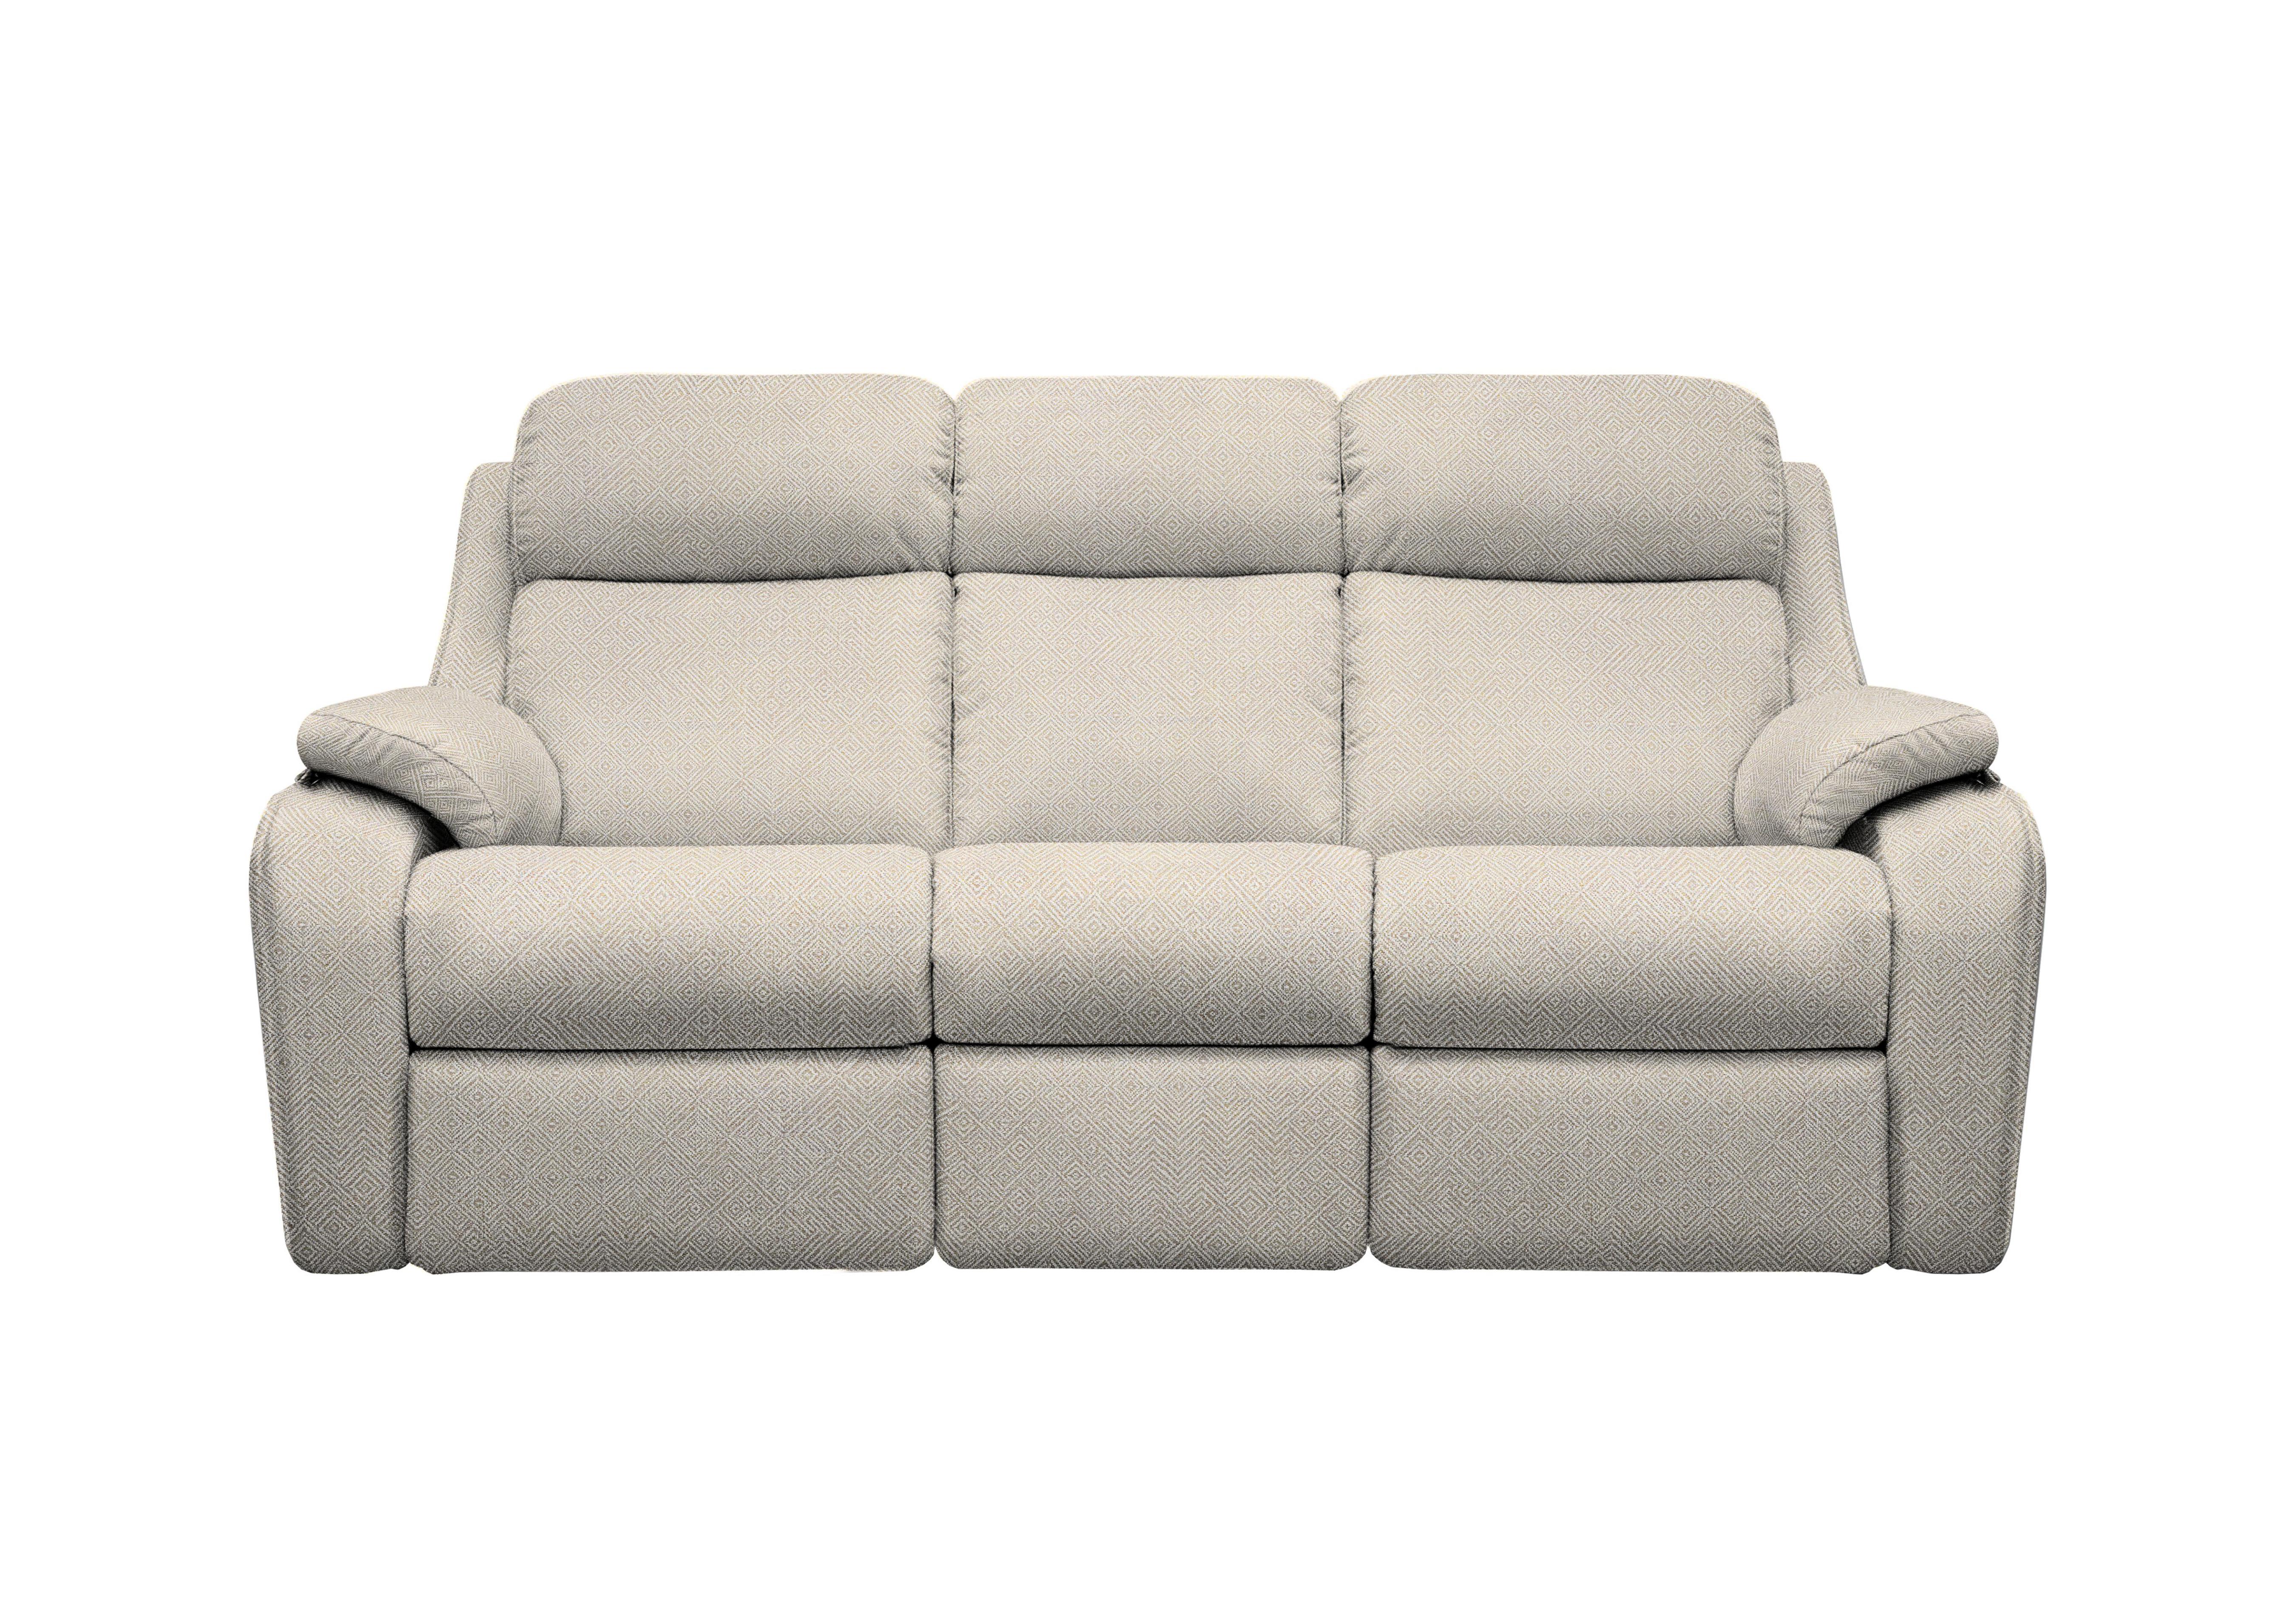 Kingsbury 3 Seater Fabric Sofa in B011 Nebular Blush on Furniture Village